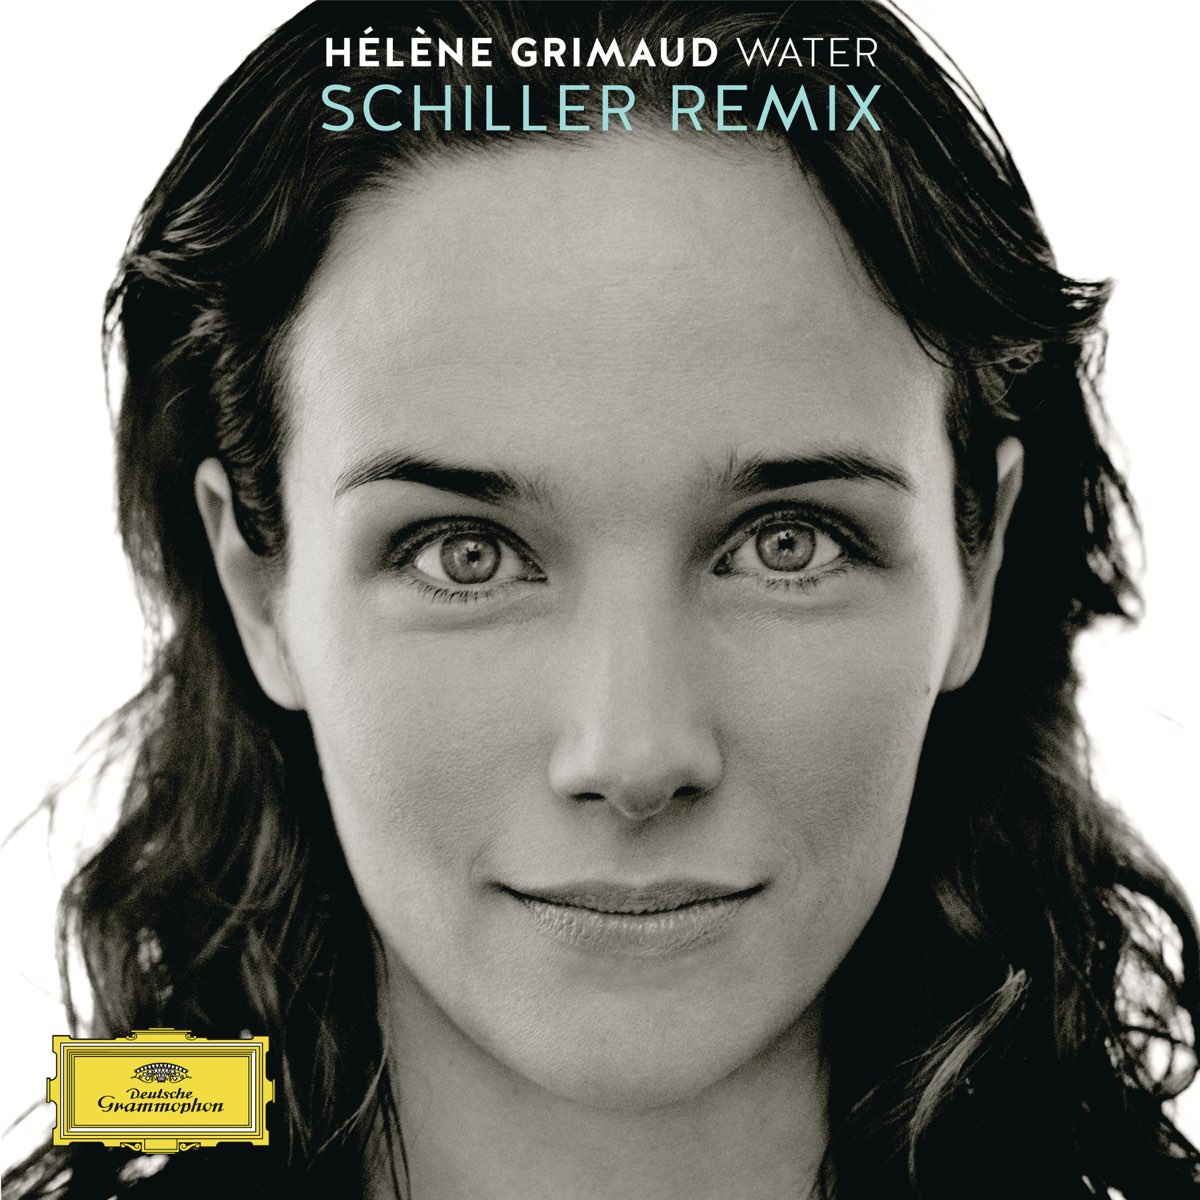 Water (Schiller Remix) - Single by Hélène Grimaud on Apple Music